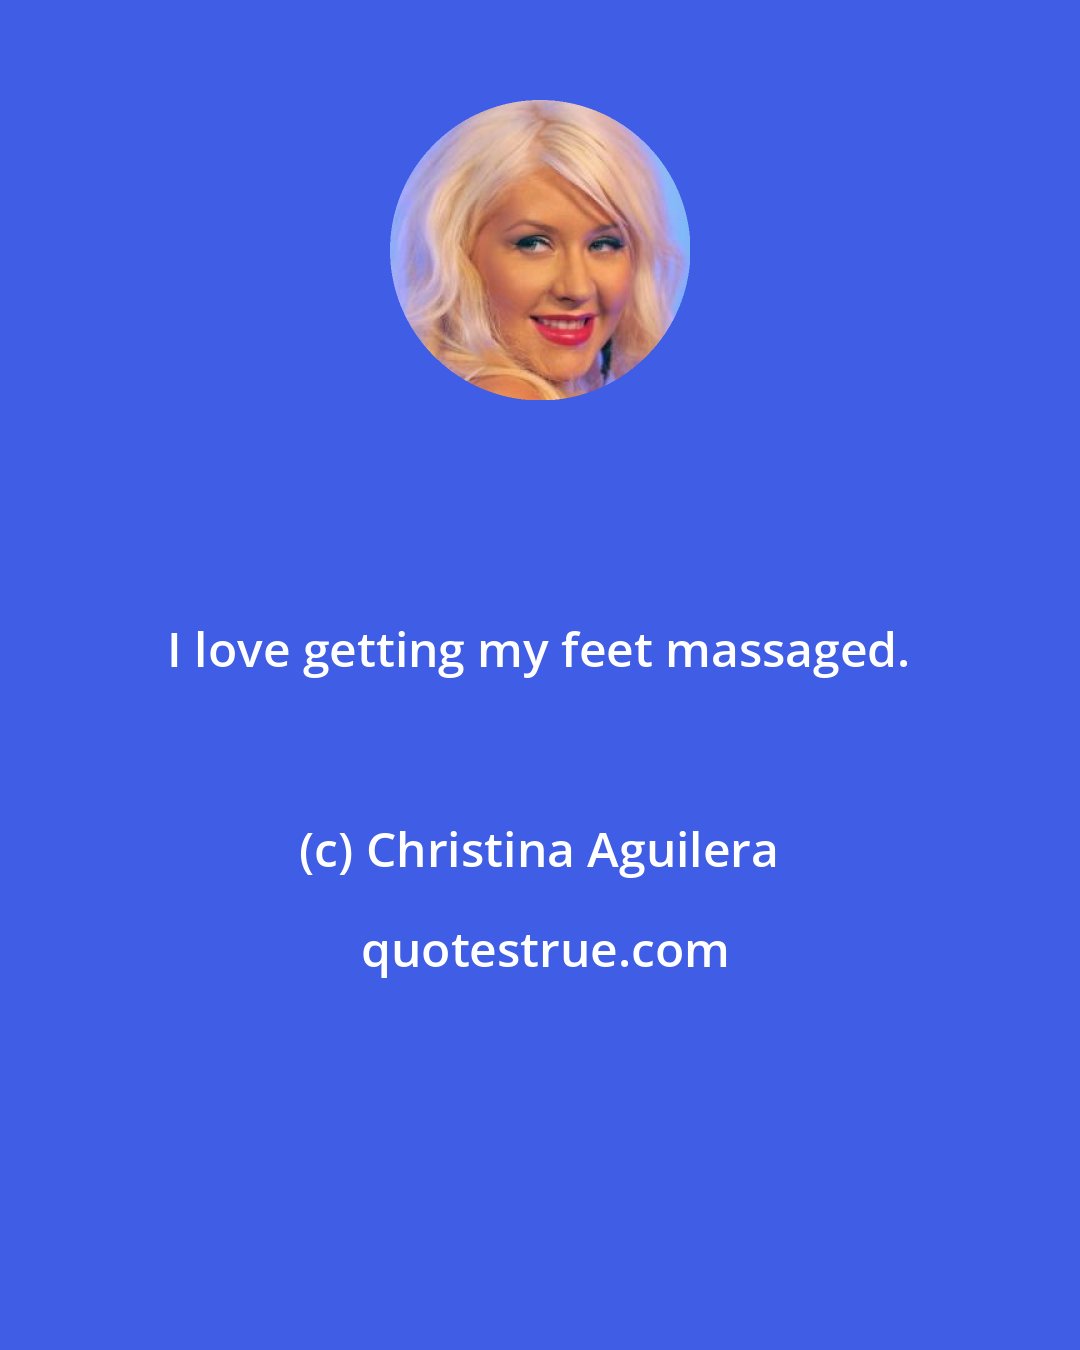 Christina Aguilera: I love getting my feet massaged.